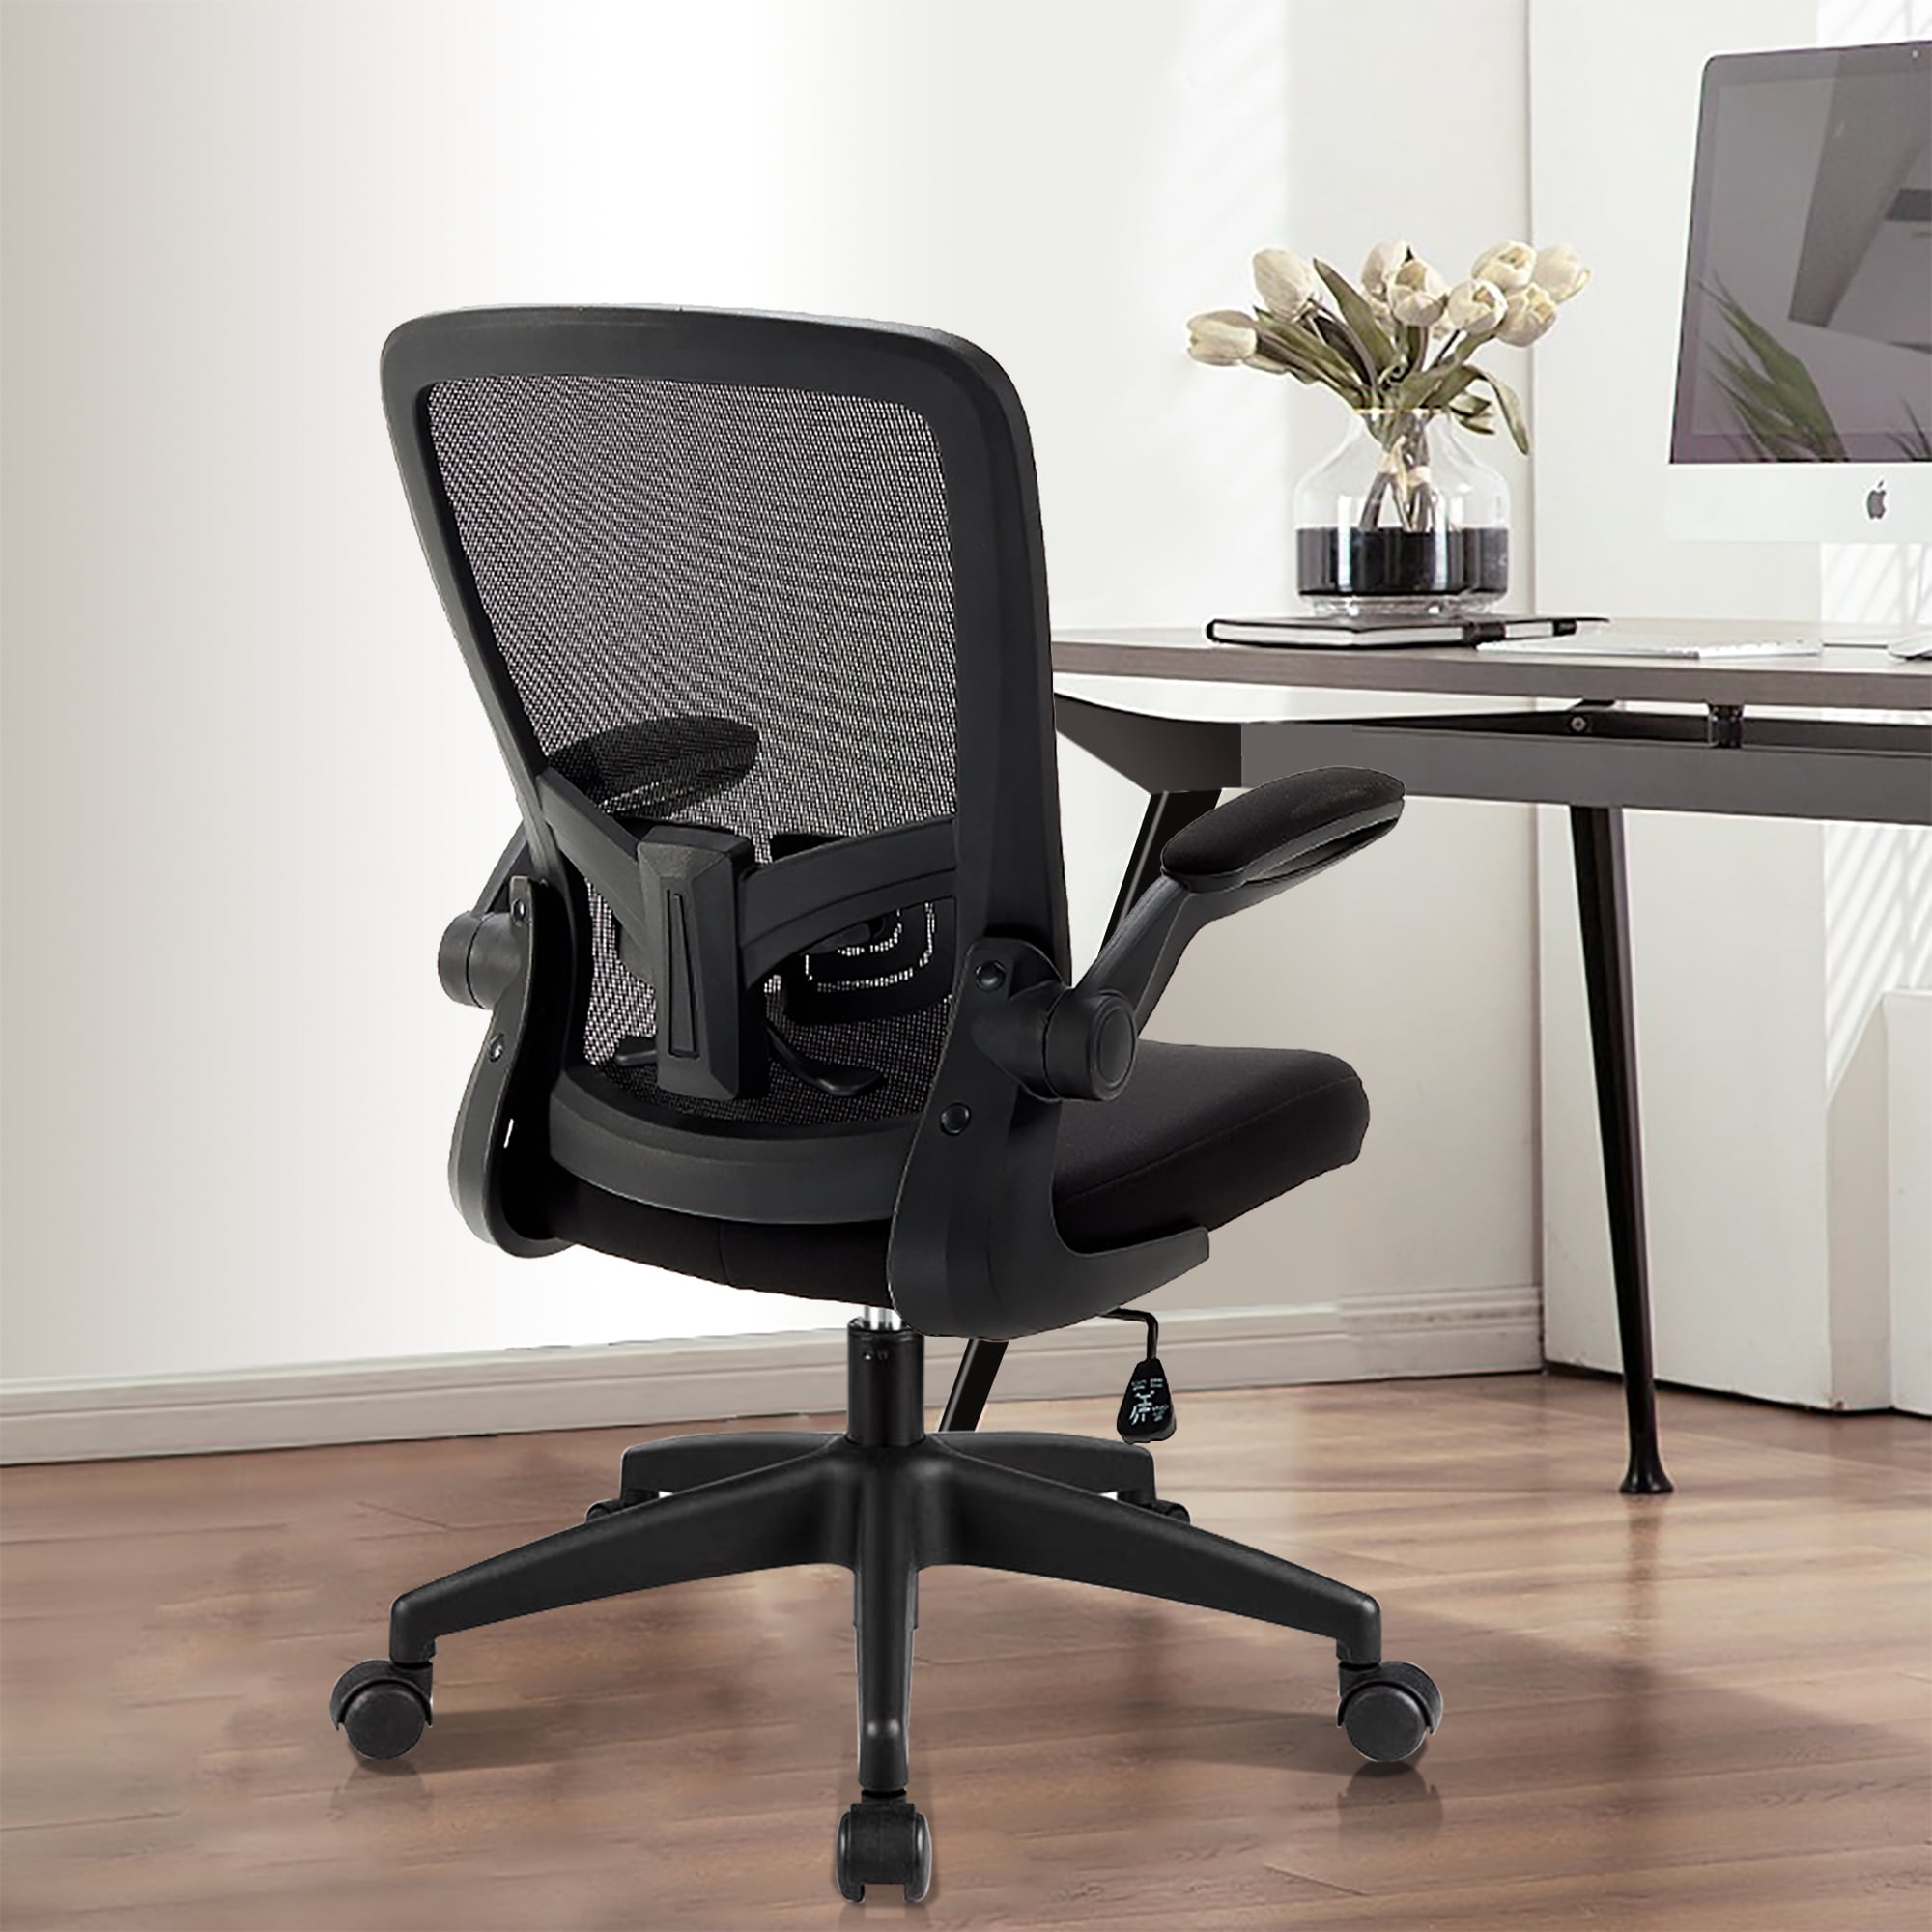 Buy FelixKing Office Chair, Ergonomic Desk Chair with Adjustable Lumbar